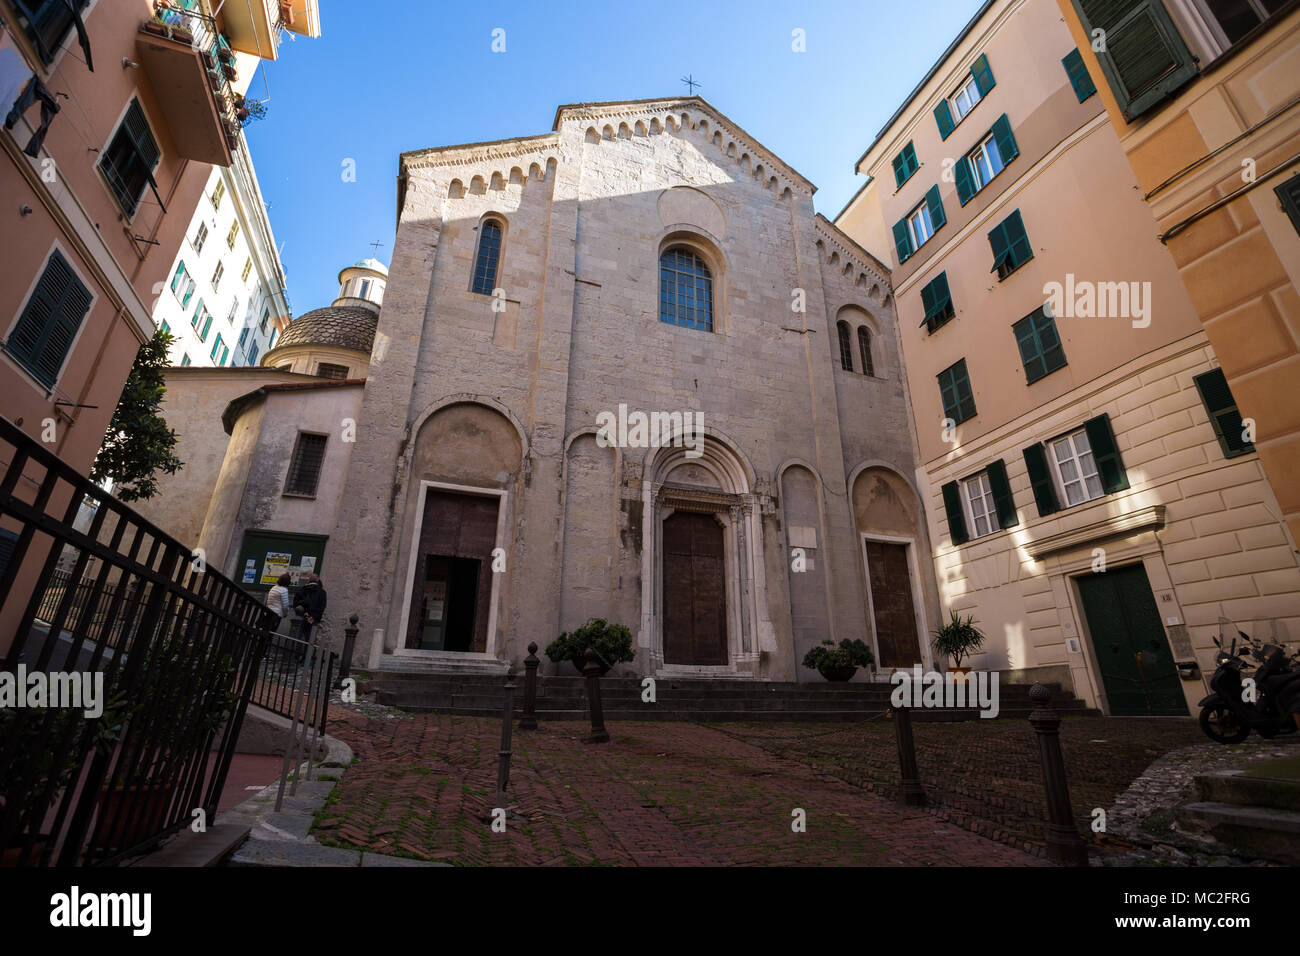 GENOA, ITALY, APRIL 5, 2018 - View of facade of Santa Maria di Castello church in old city centre of Genoa, Italy. Stock Photo